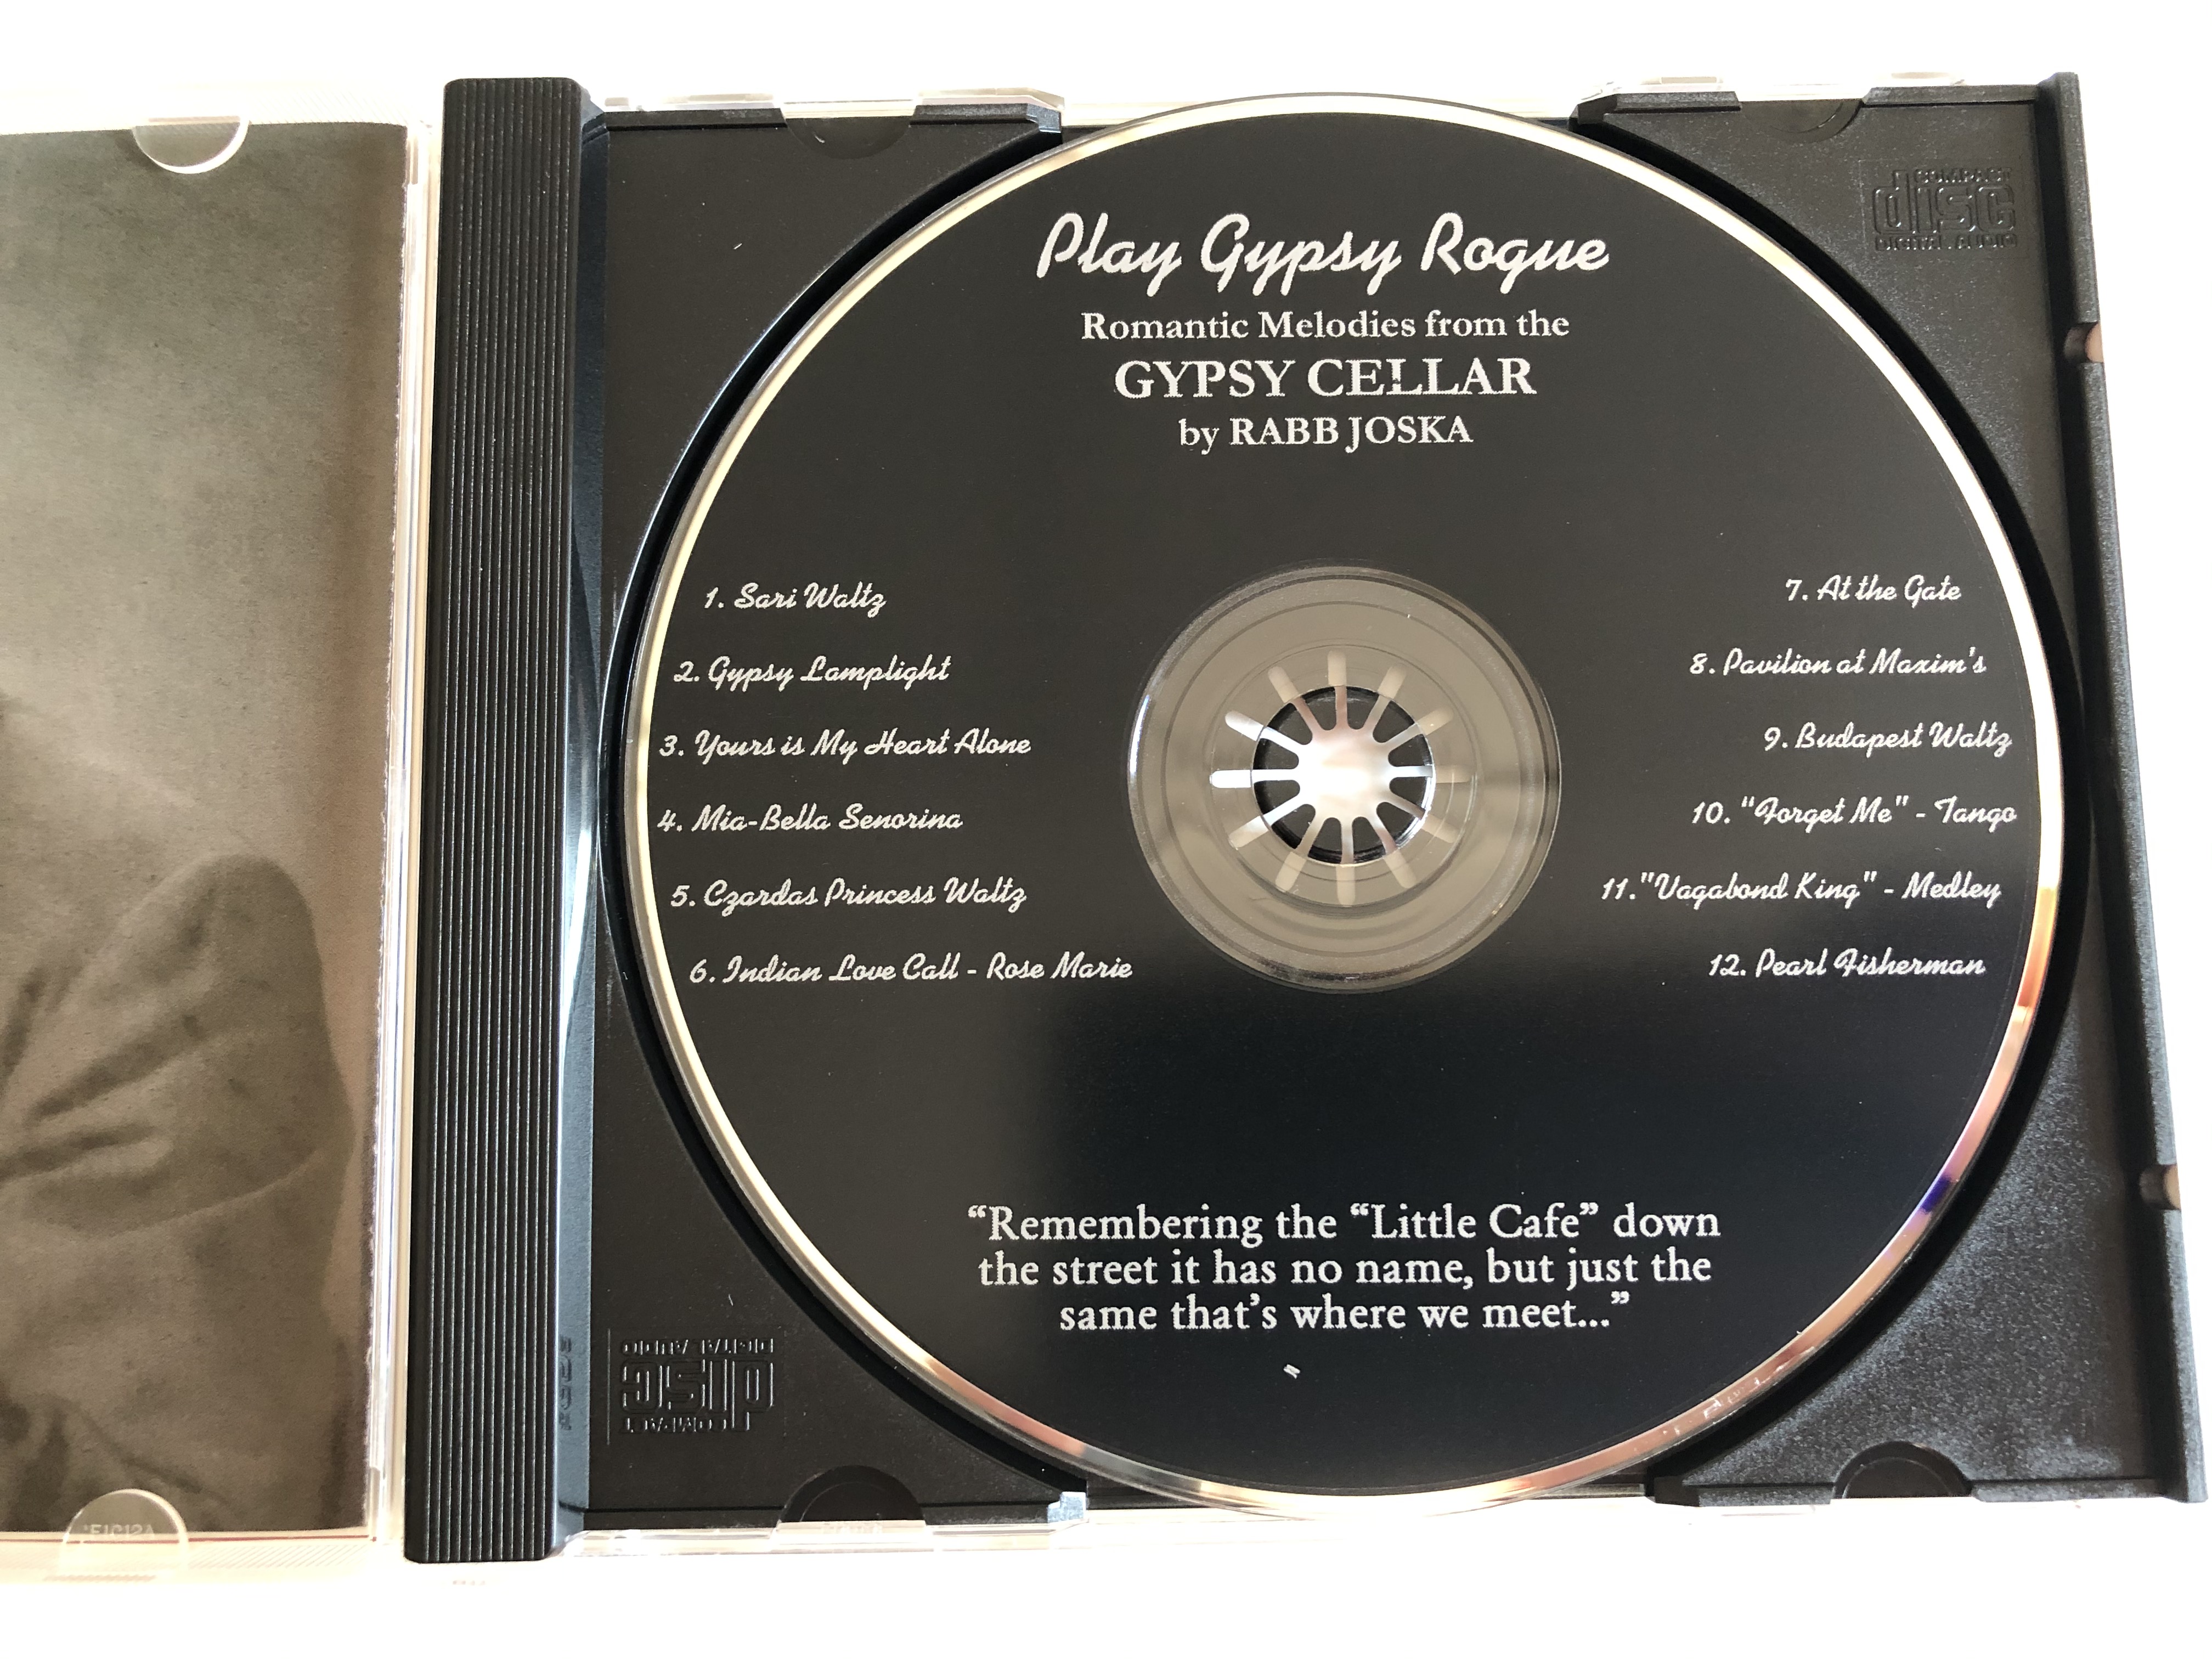 play-gypsy-rogue-romantic-melodies-by-rabb-j-ska-gypsy-cellar-records-audio-cd-9781424310265-4-.jpg